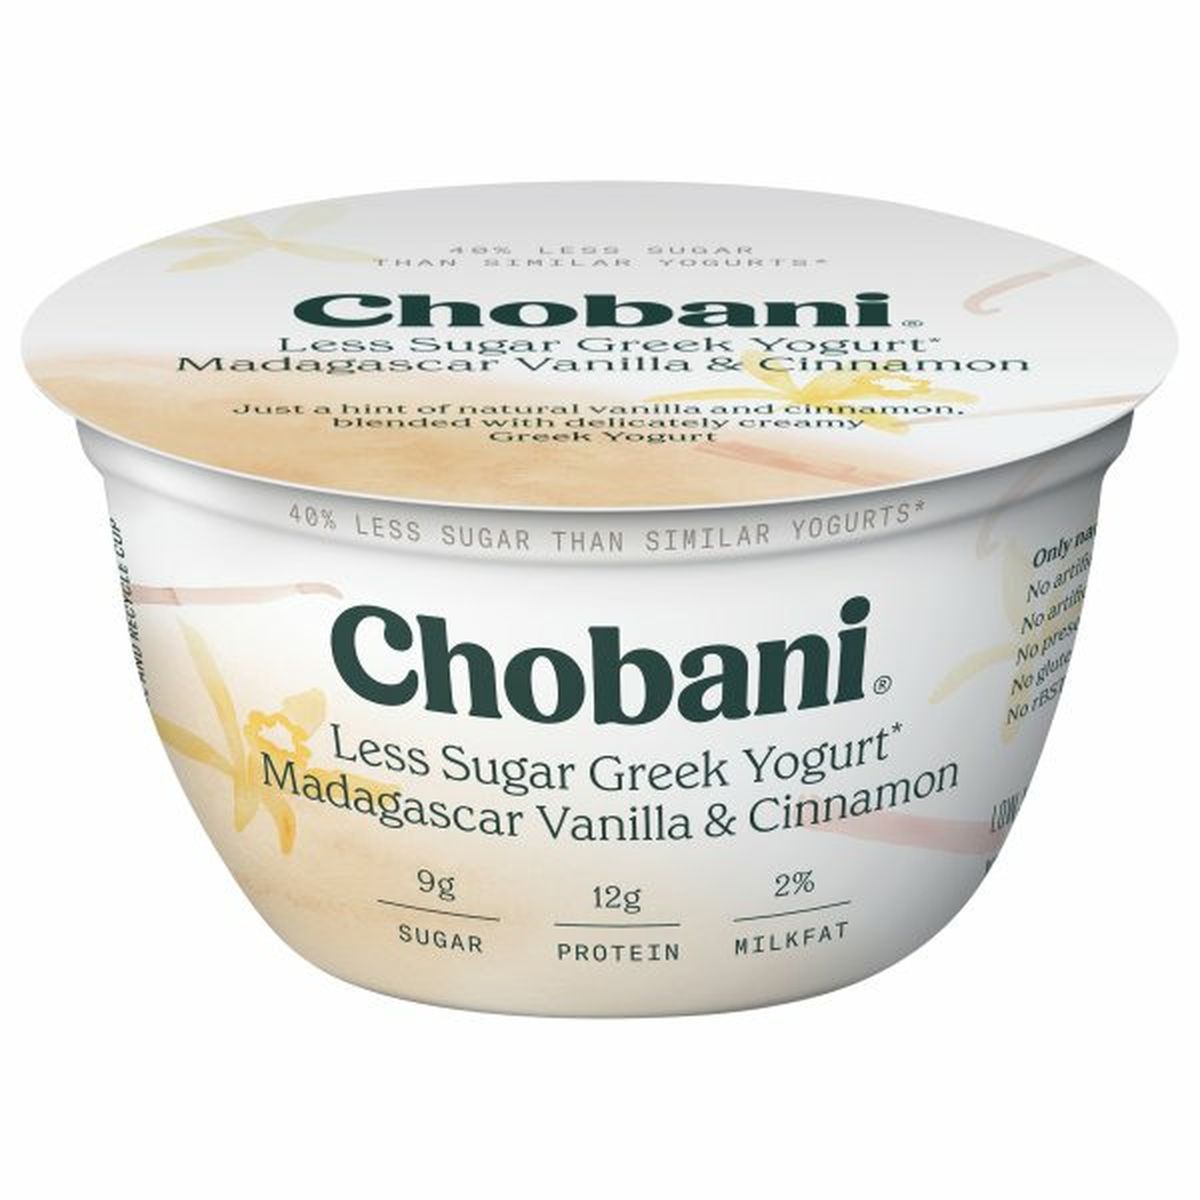 Calories in Chobani Yogurt, Less Sugar, Low-Fat, Greek, Madagascar Vanilla & Cinnamon